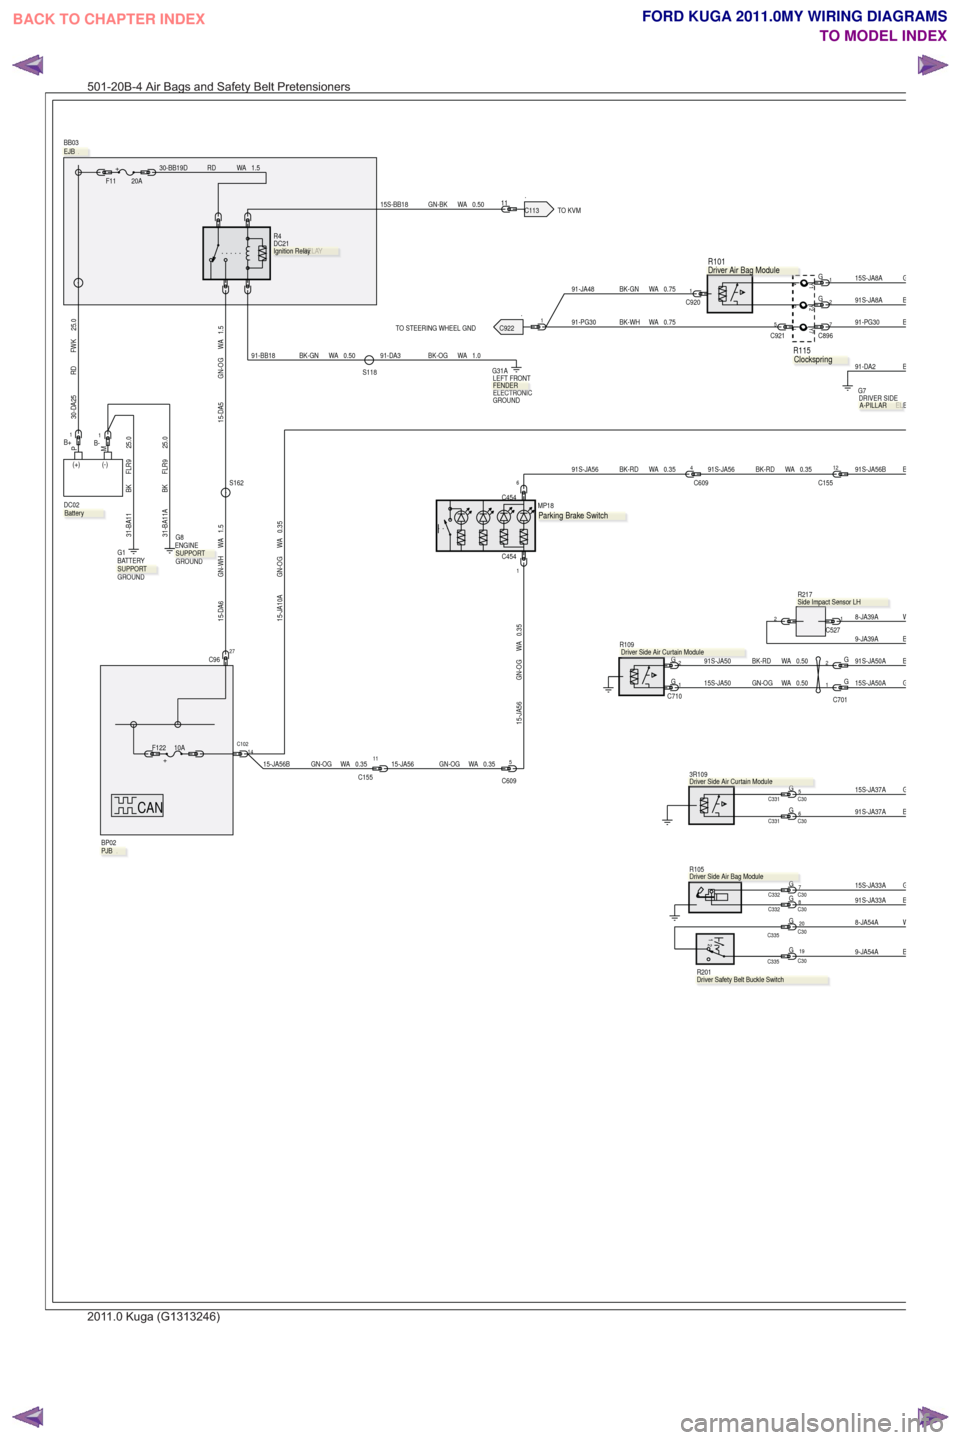 FORD KUGA 2011 1.G Wiring Diagram Manual PDF .TO KVM
.TO STEERING WHEEL GND
CAN
B9-JA39A
2
.
R217
1C527W8-JA39A
30-DA25 RD FWK 25.0
1G
2G91S-JA8AB
G15S-JA8A
3R109
.
R105.
91S-JA33AB15S-JA33AG
91S-JA37AB
1 2
.
R201
0.35
WA
GN-OG
15-JA10A
PM
(+) (